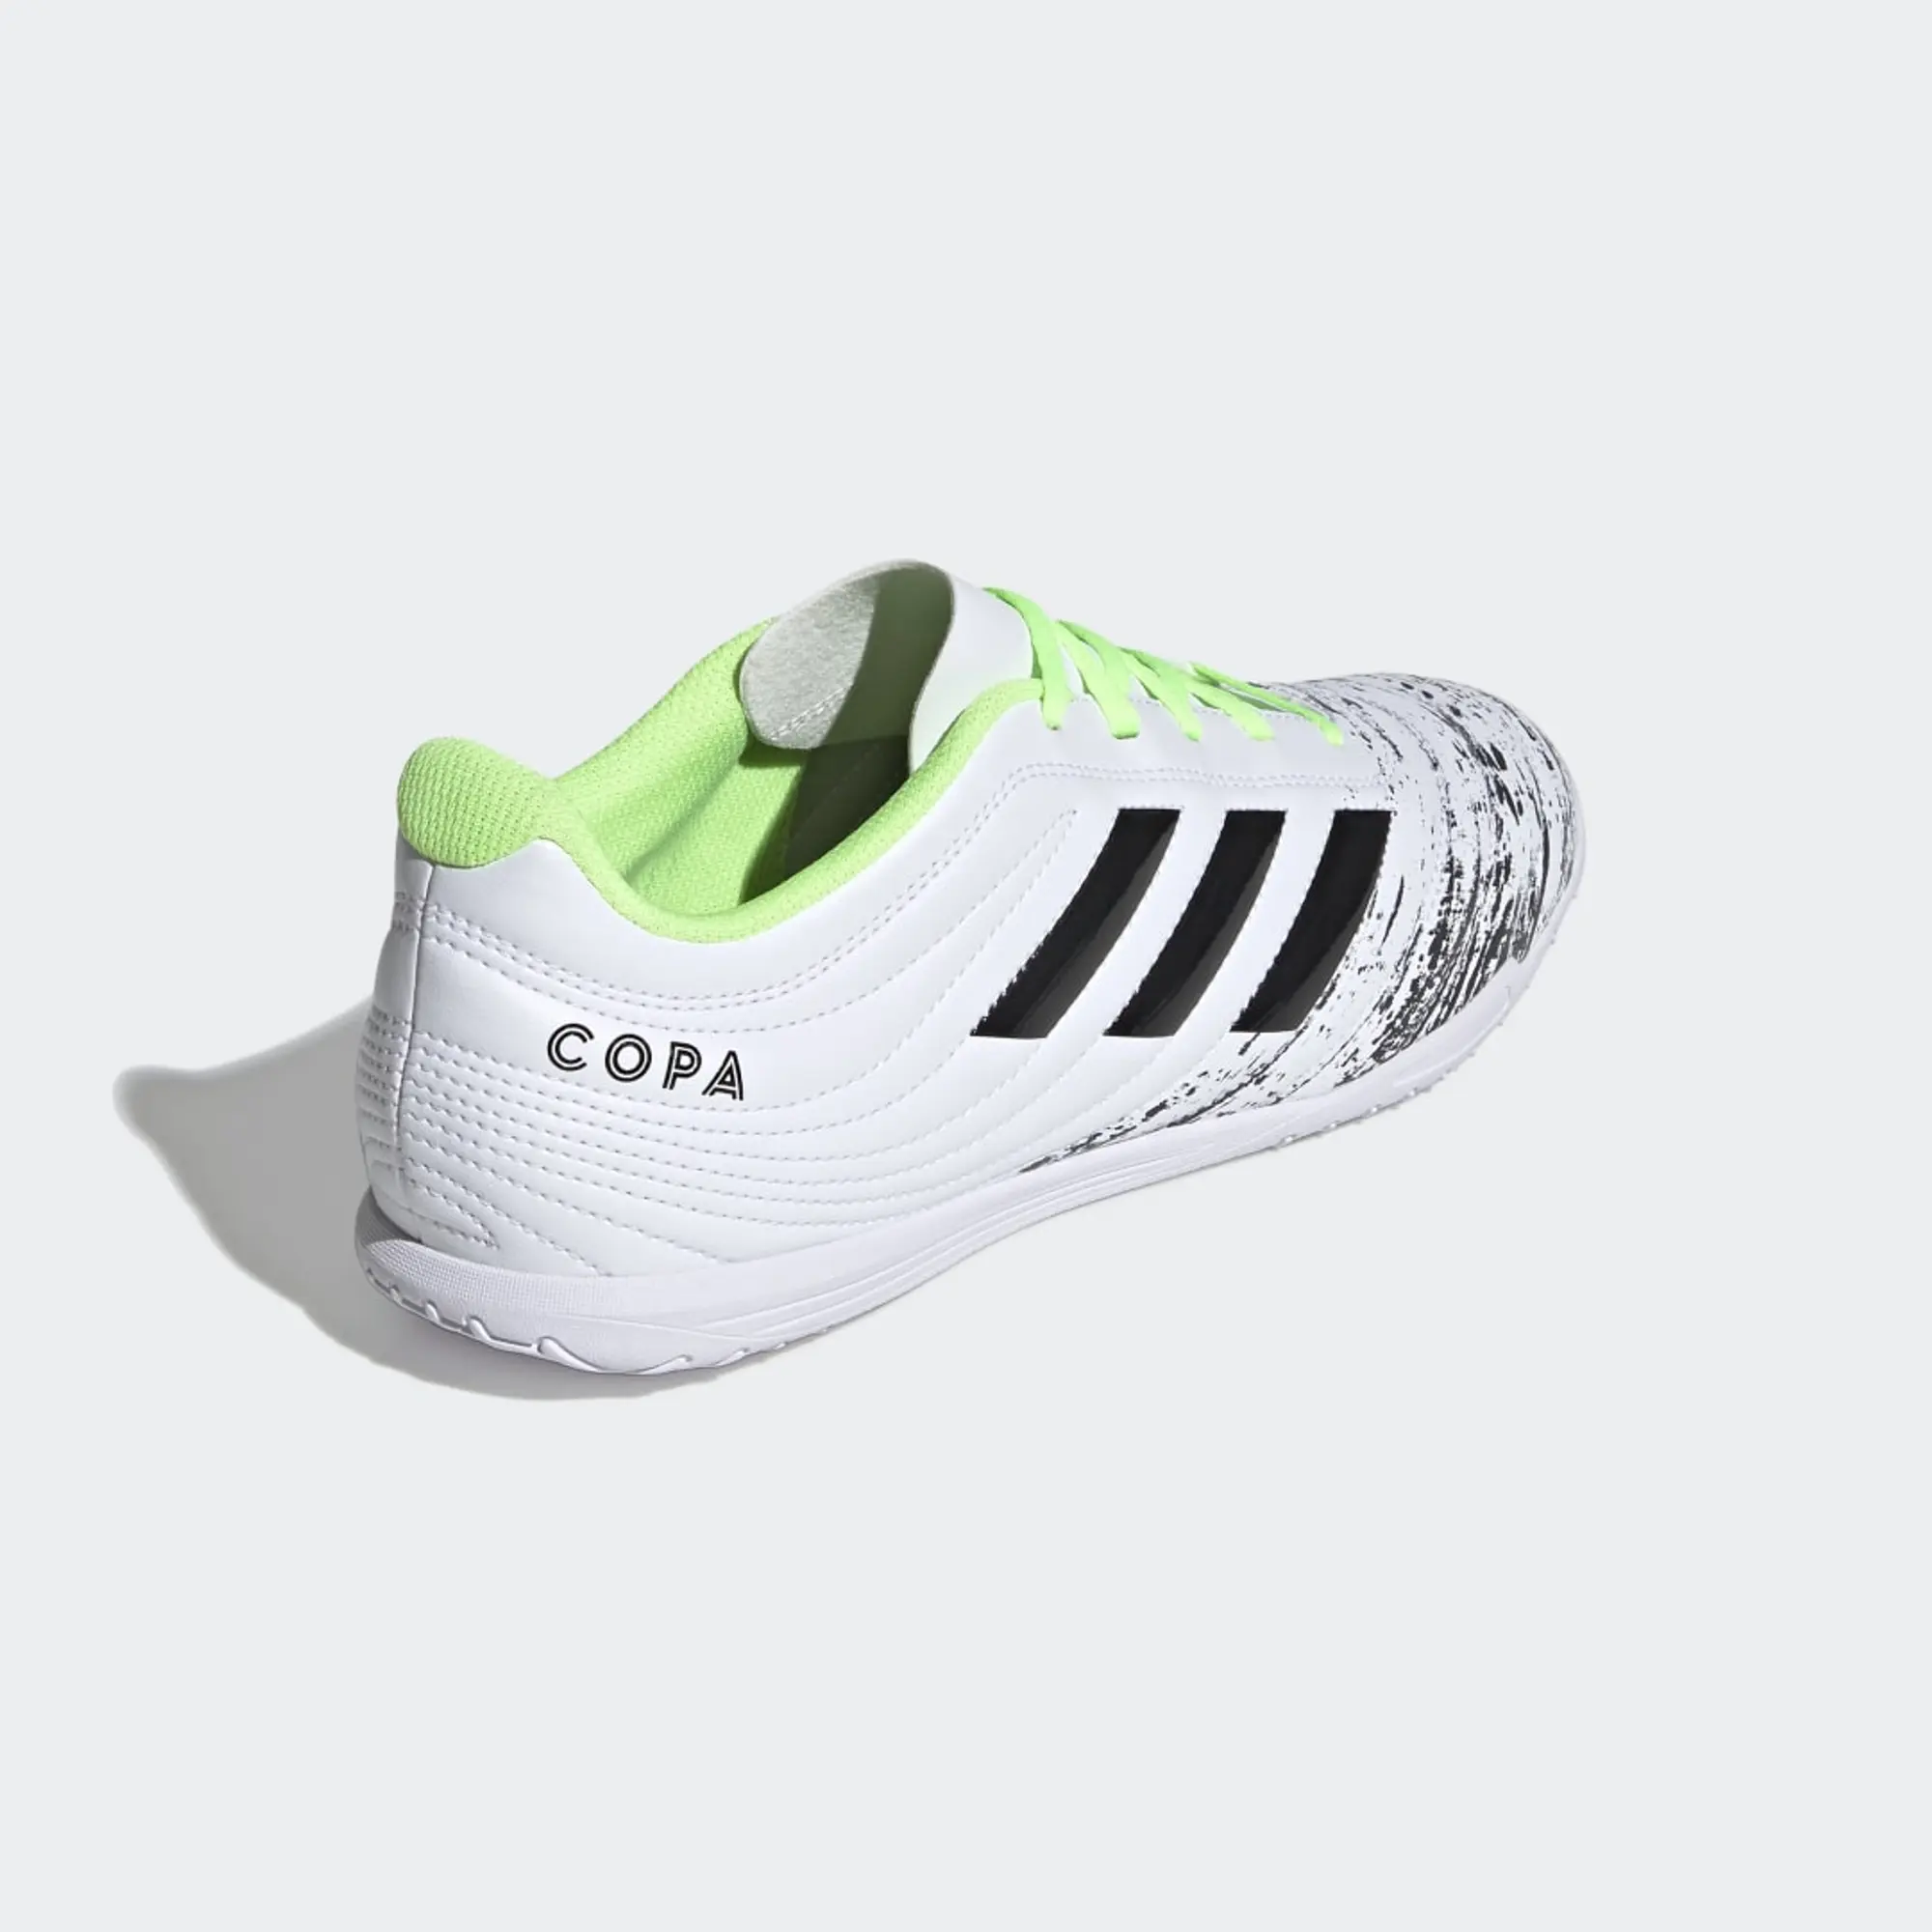 Adidas Copa Sense+ LE Soft Ground Boots Mens